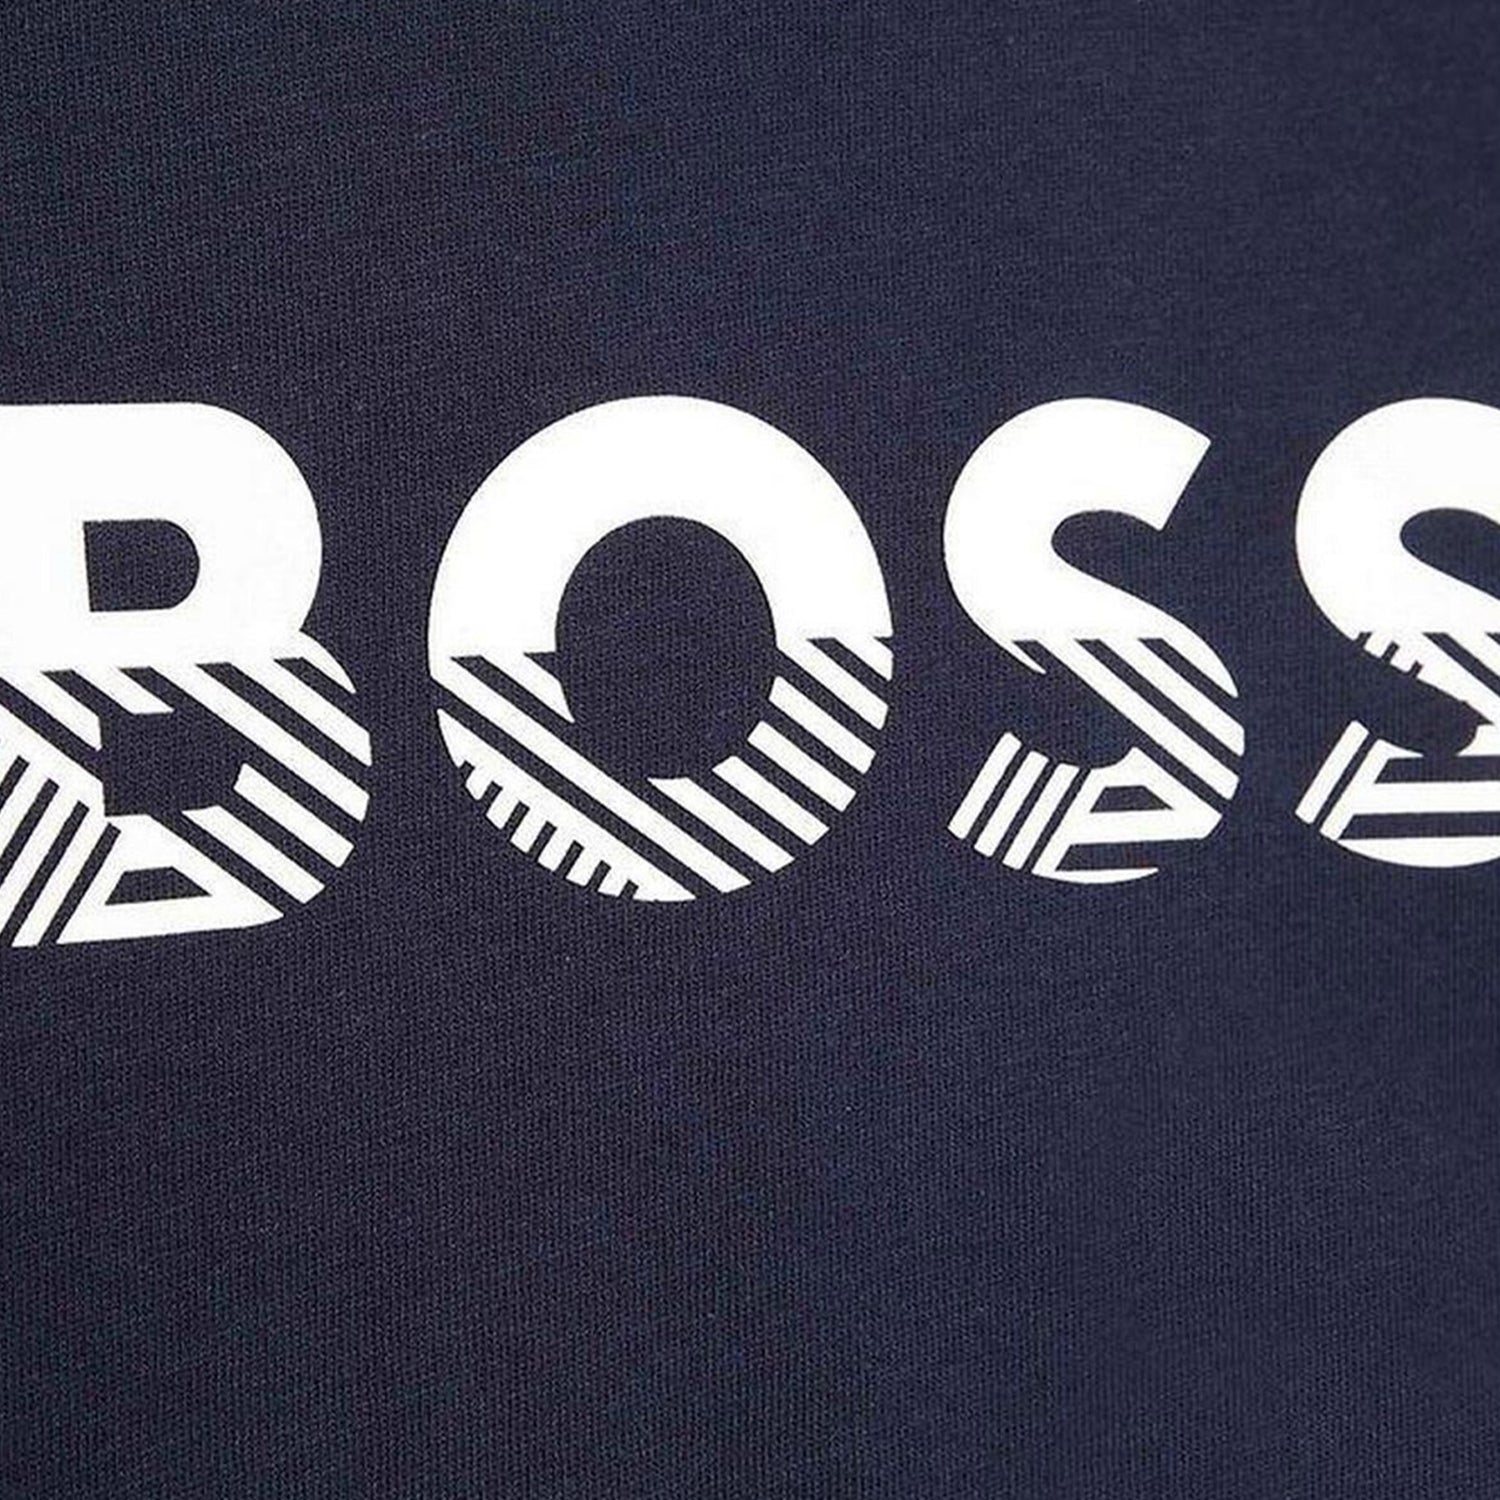 hugo-boss-kids-logo-printed-t-shirt-j25m00-849